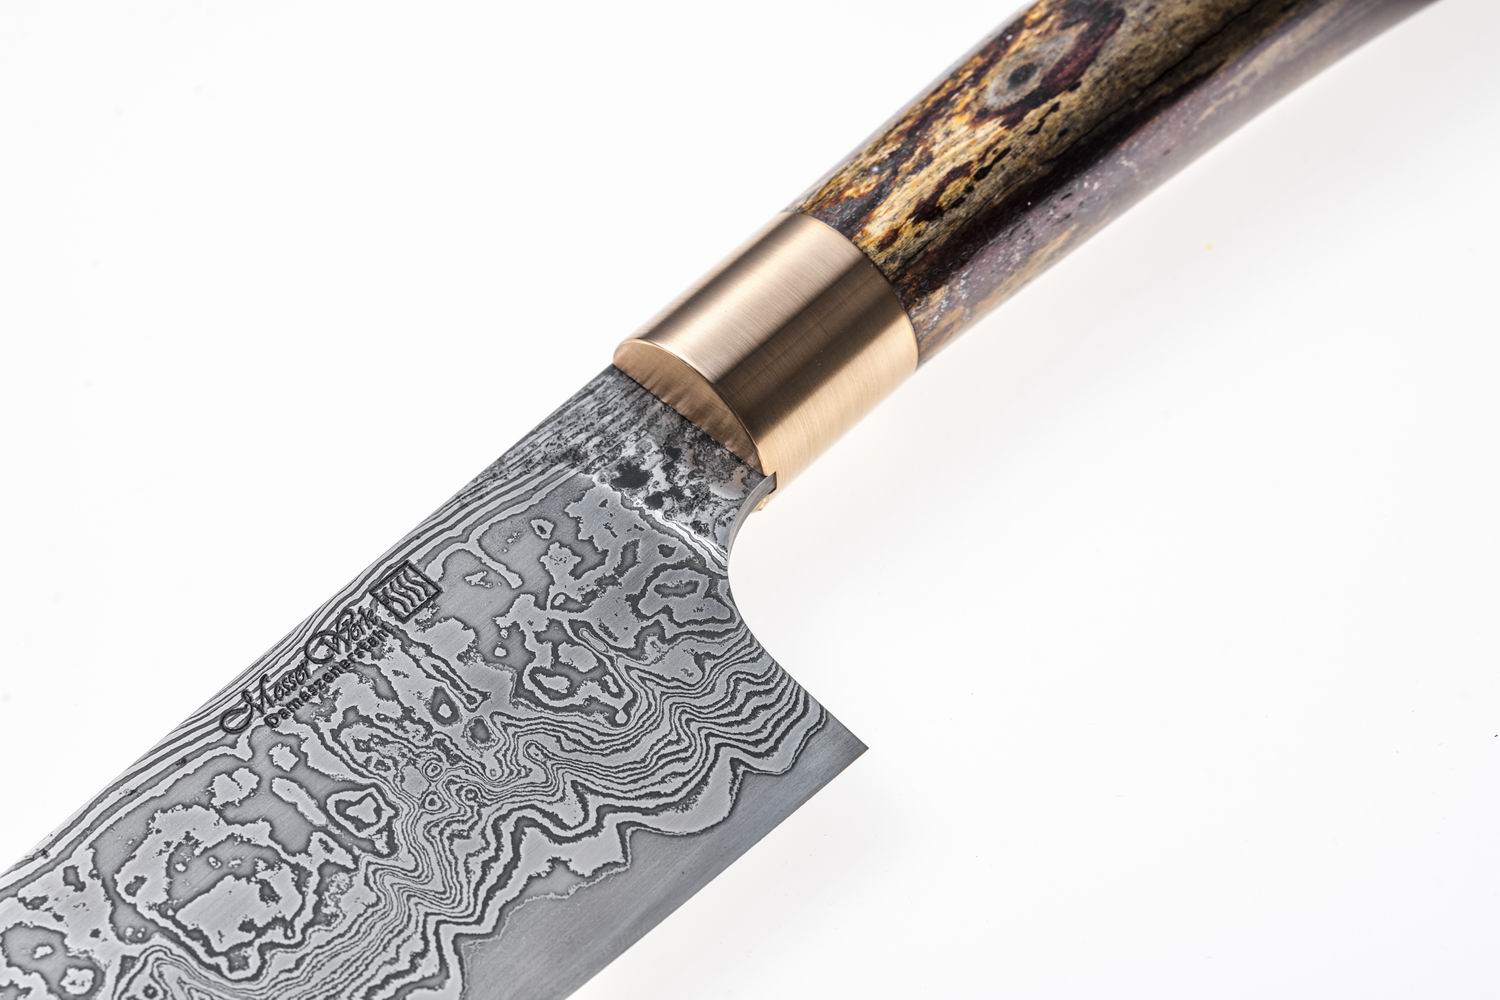 Custom Santoku with San Mai Damascus Steel Blade